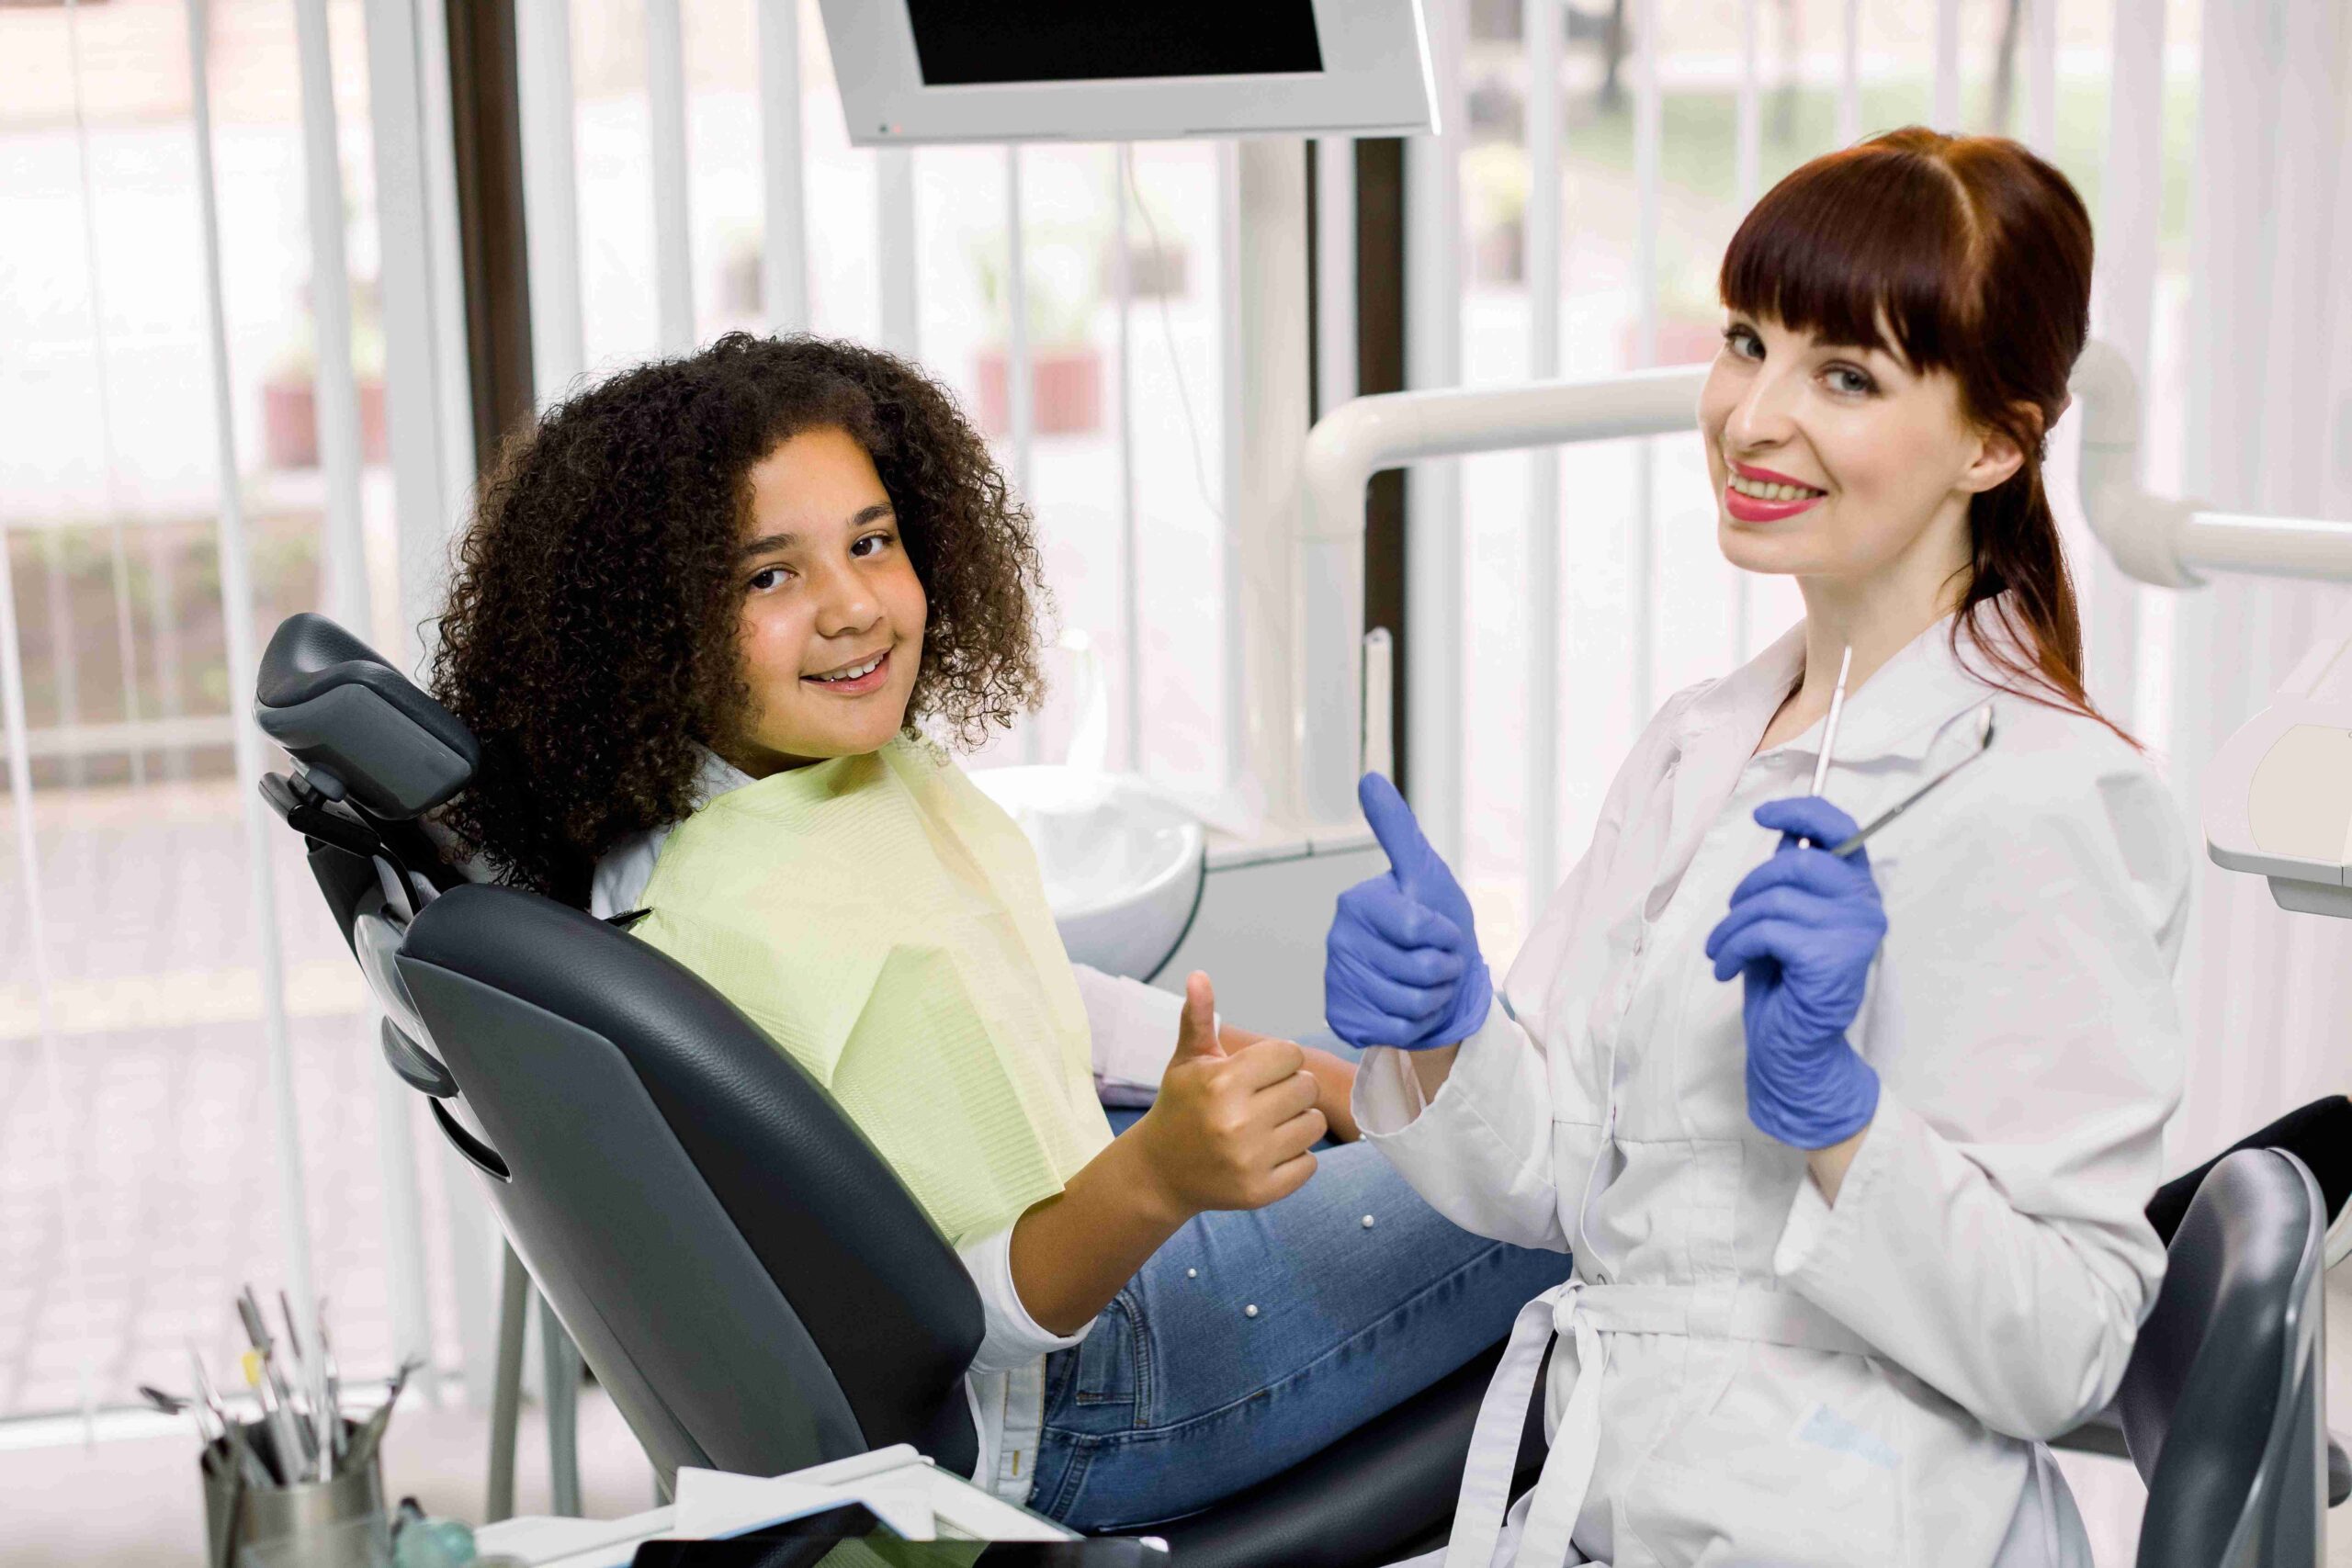 Invisalign: The Future of Orthodontic Treatment